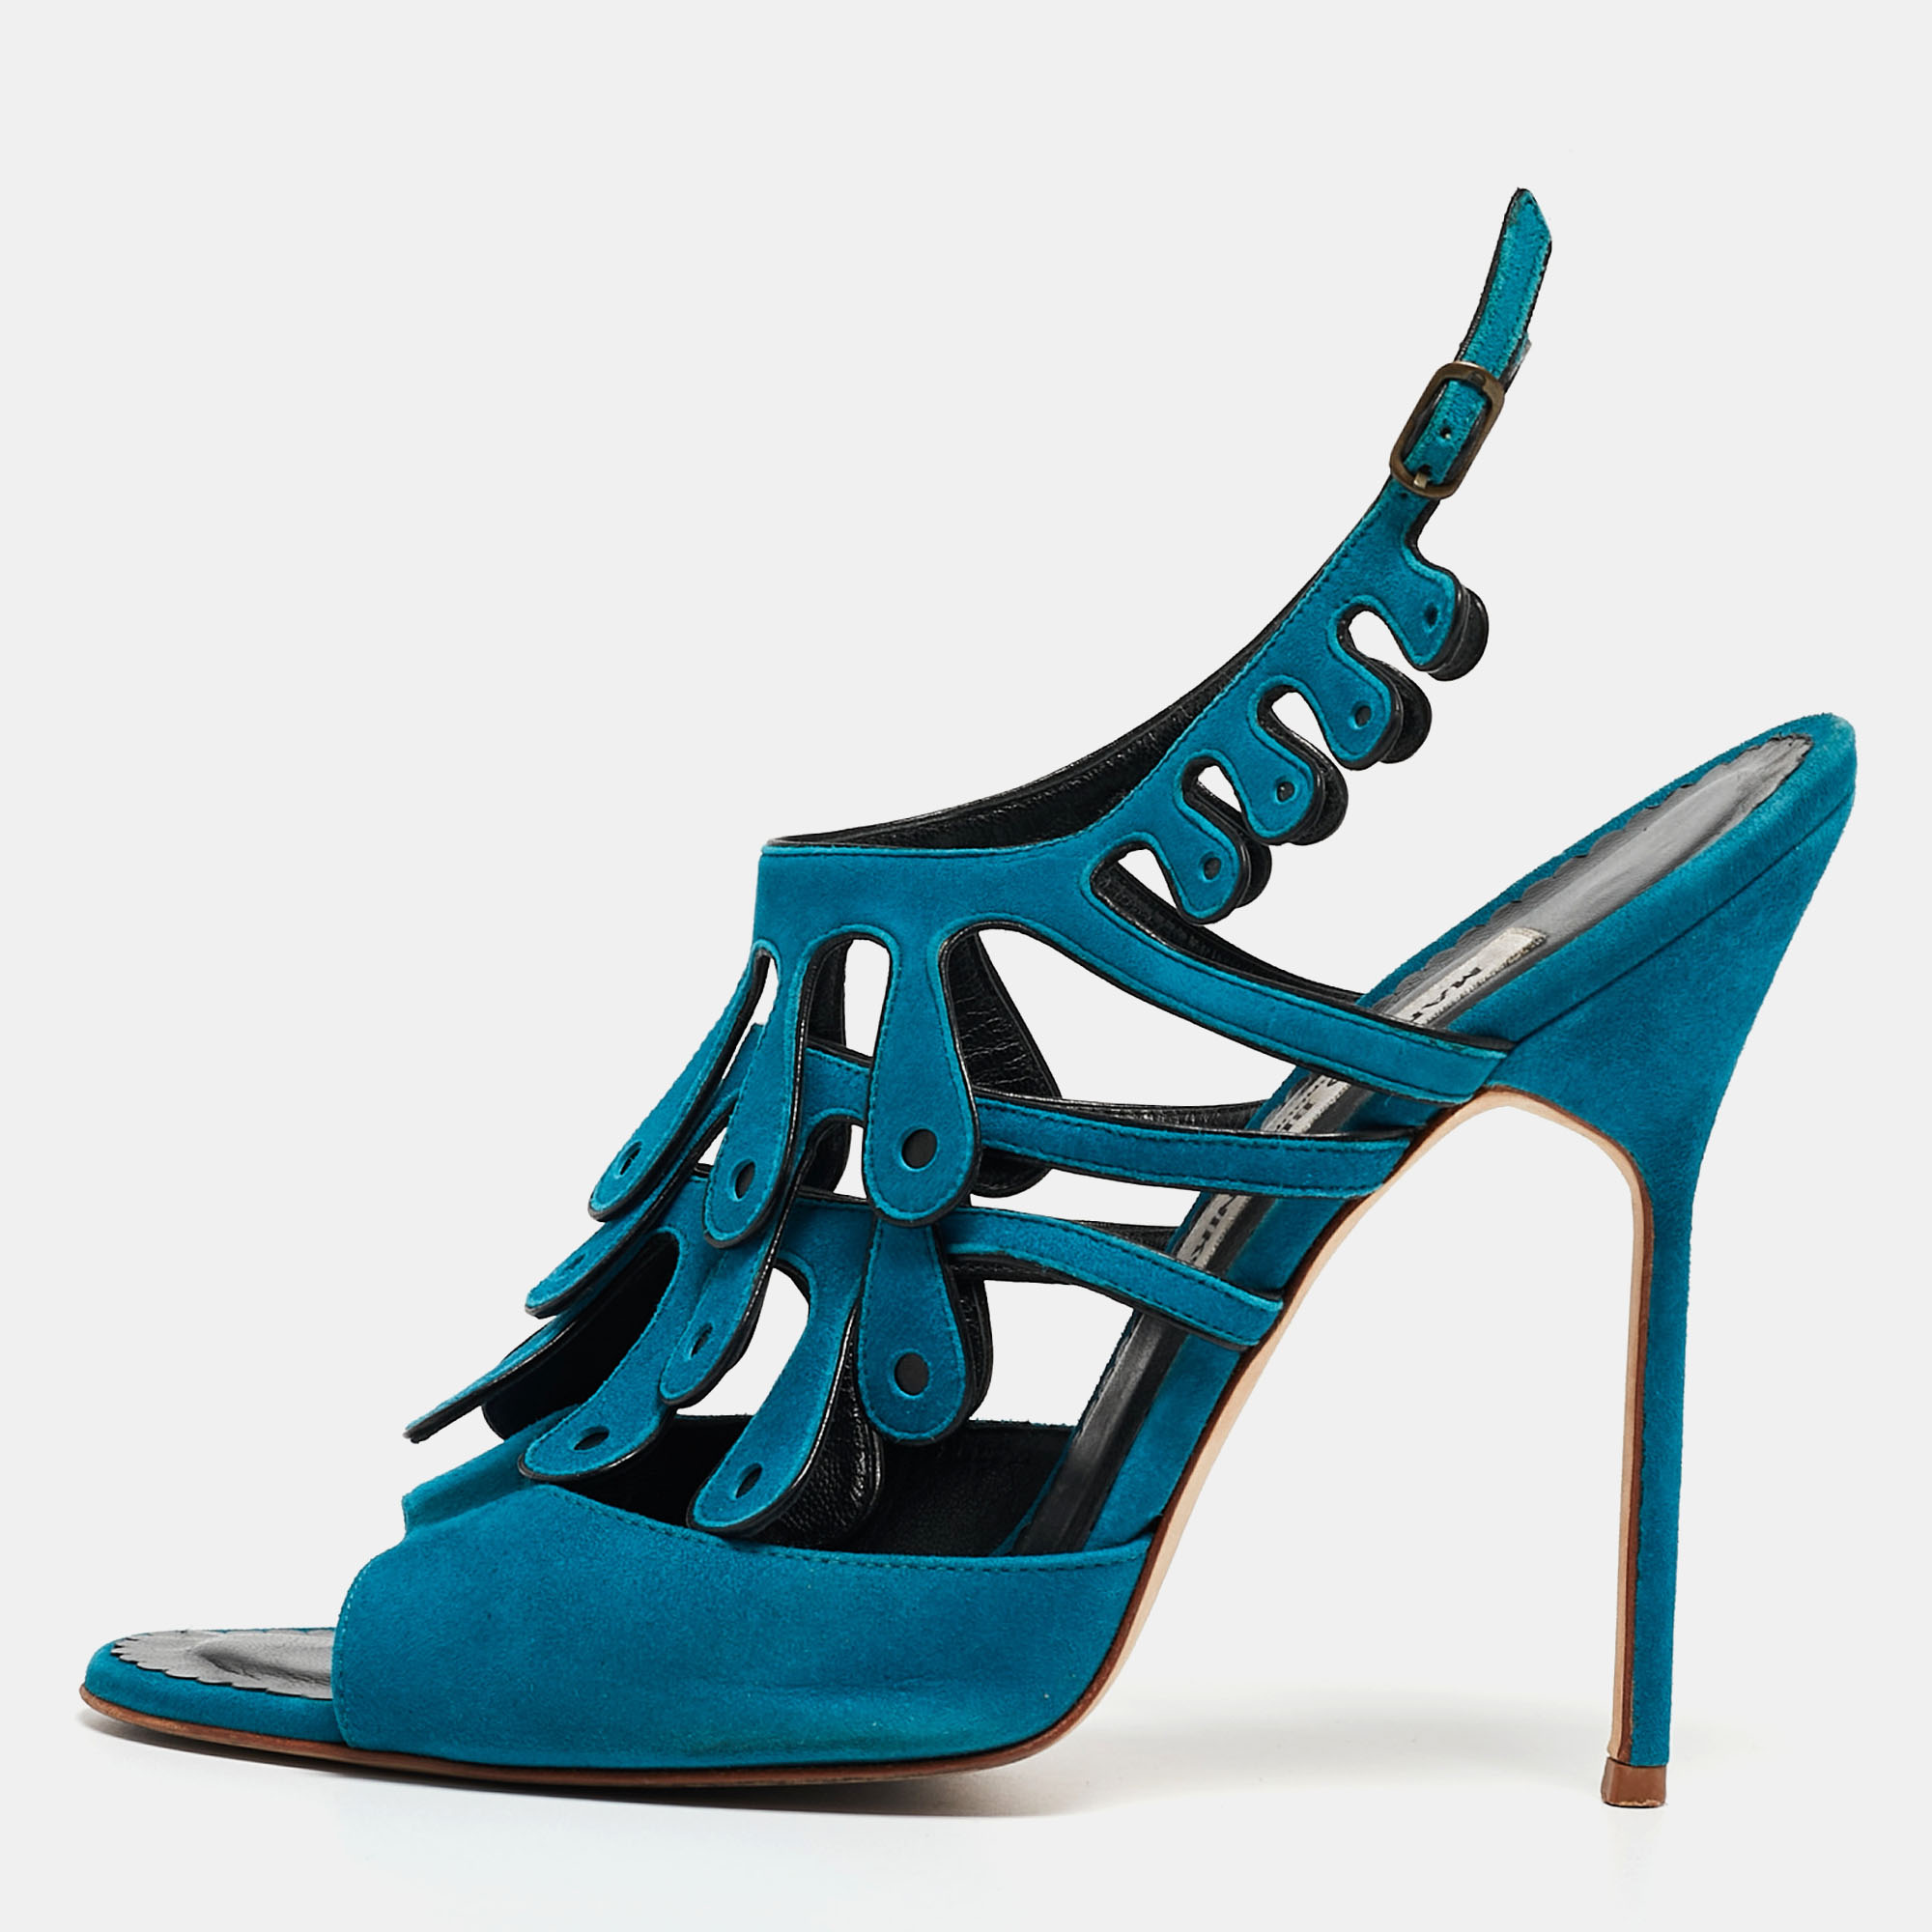 Manolo blahnik blue suede toubib ankle strap sandals size 40